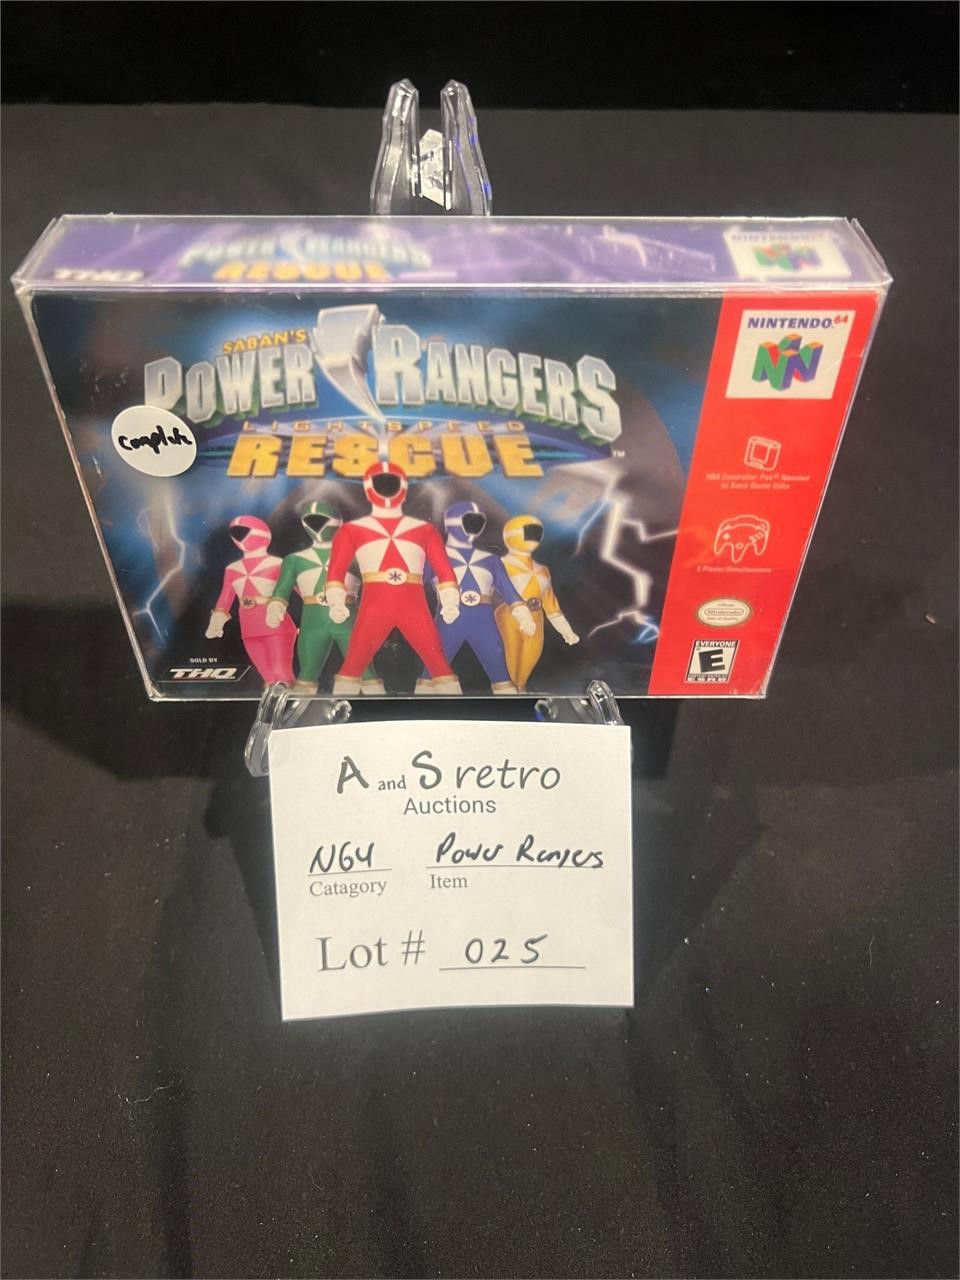 Power Rangers Rescue Complete Nintendo 64 N64